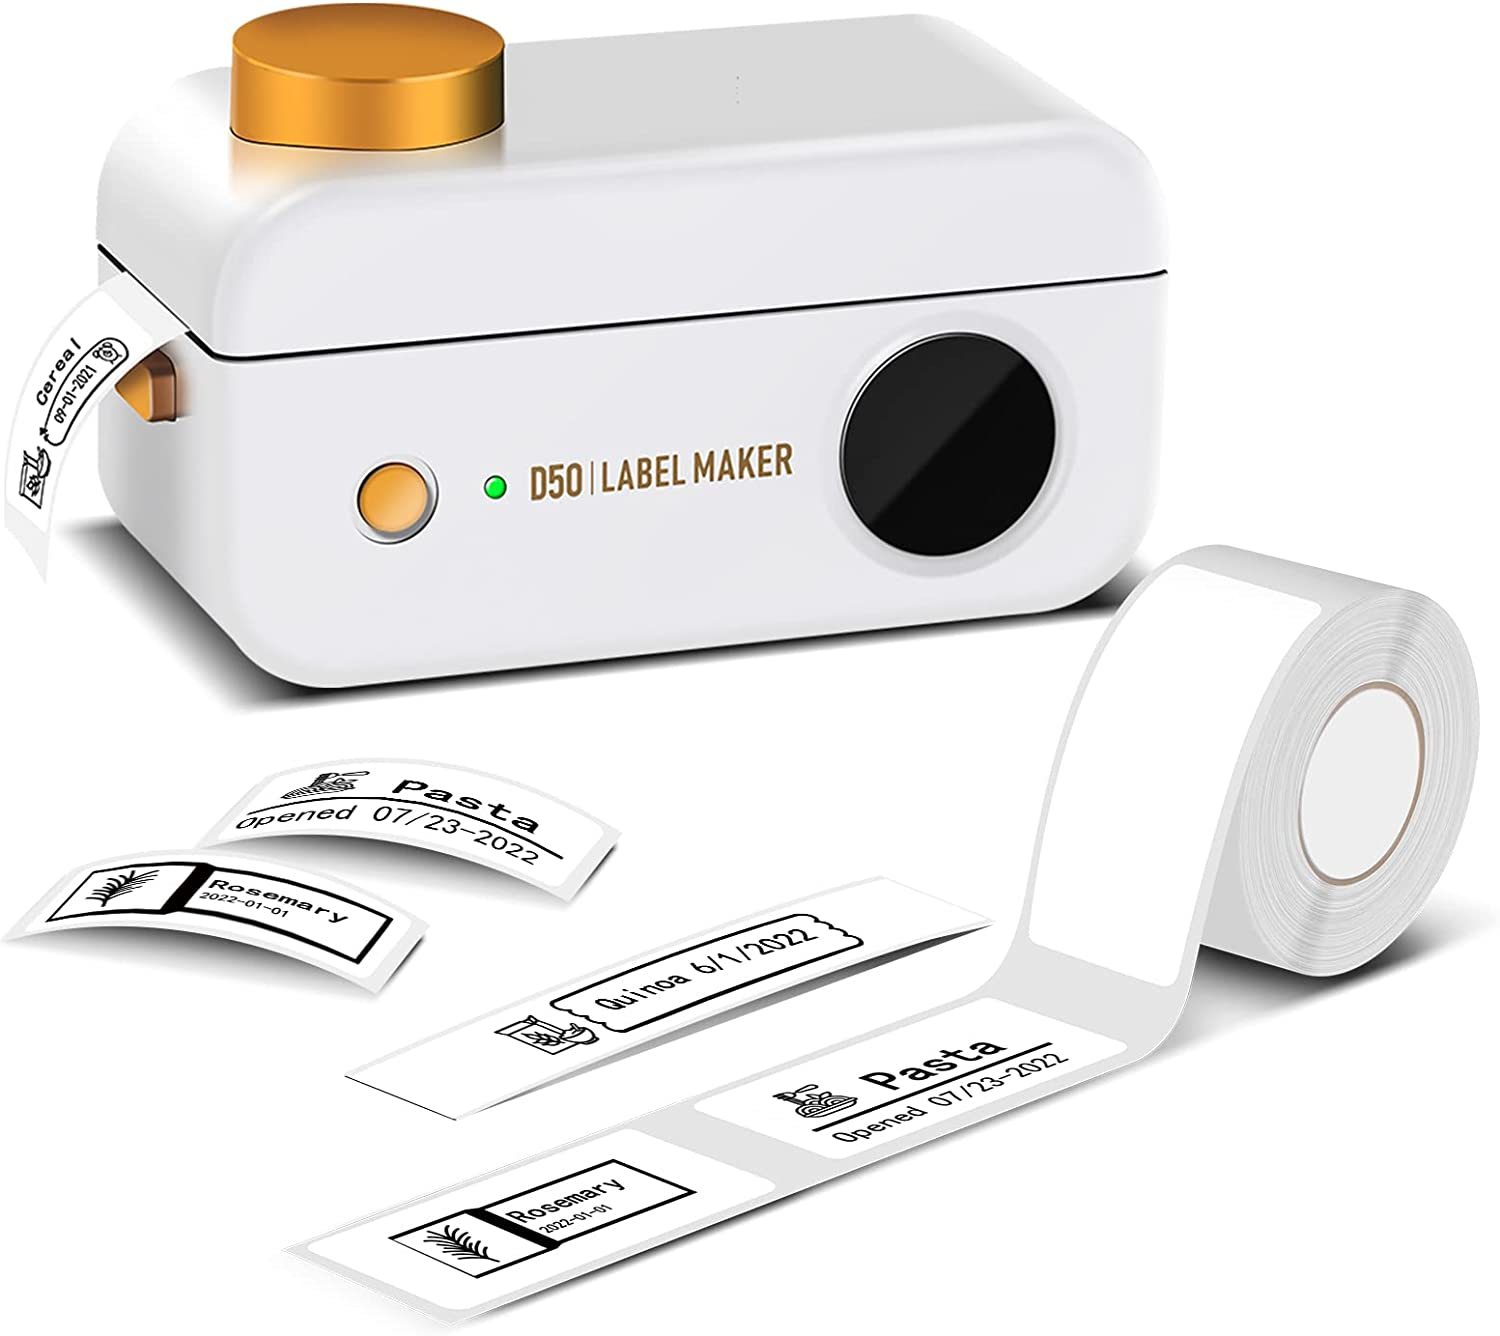 Primary image for Label Maker -Phomemo D50 Mini Label Maker Portable Bluetooth Label Maker